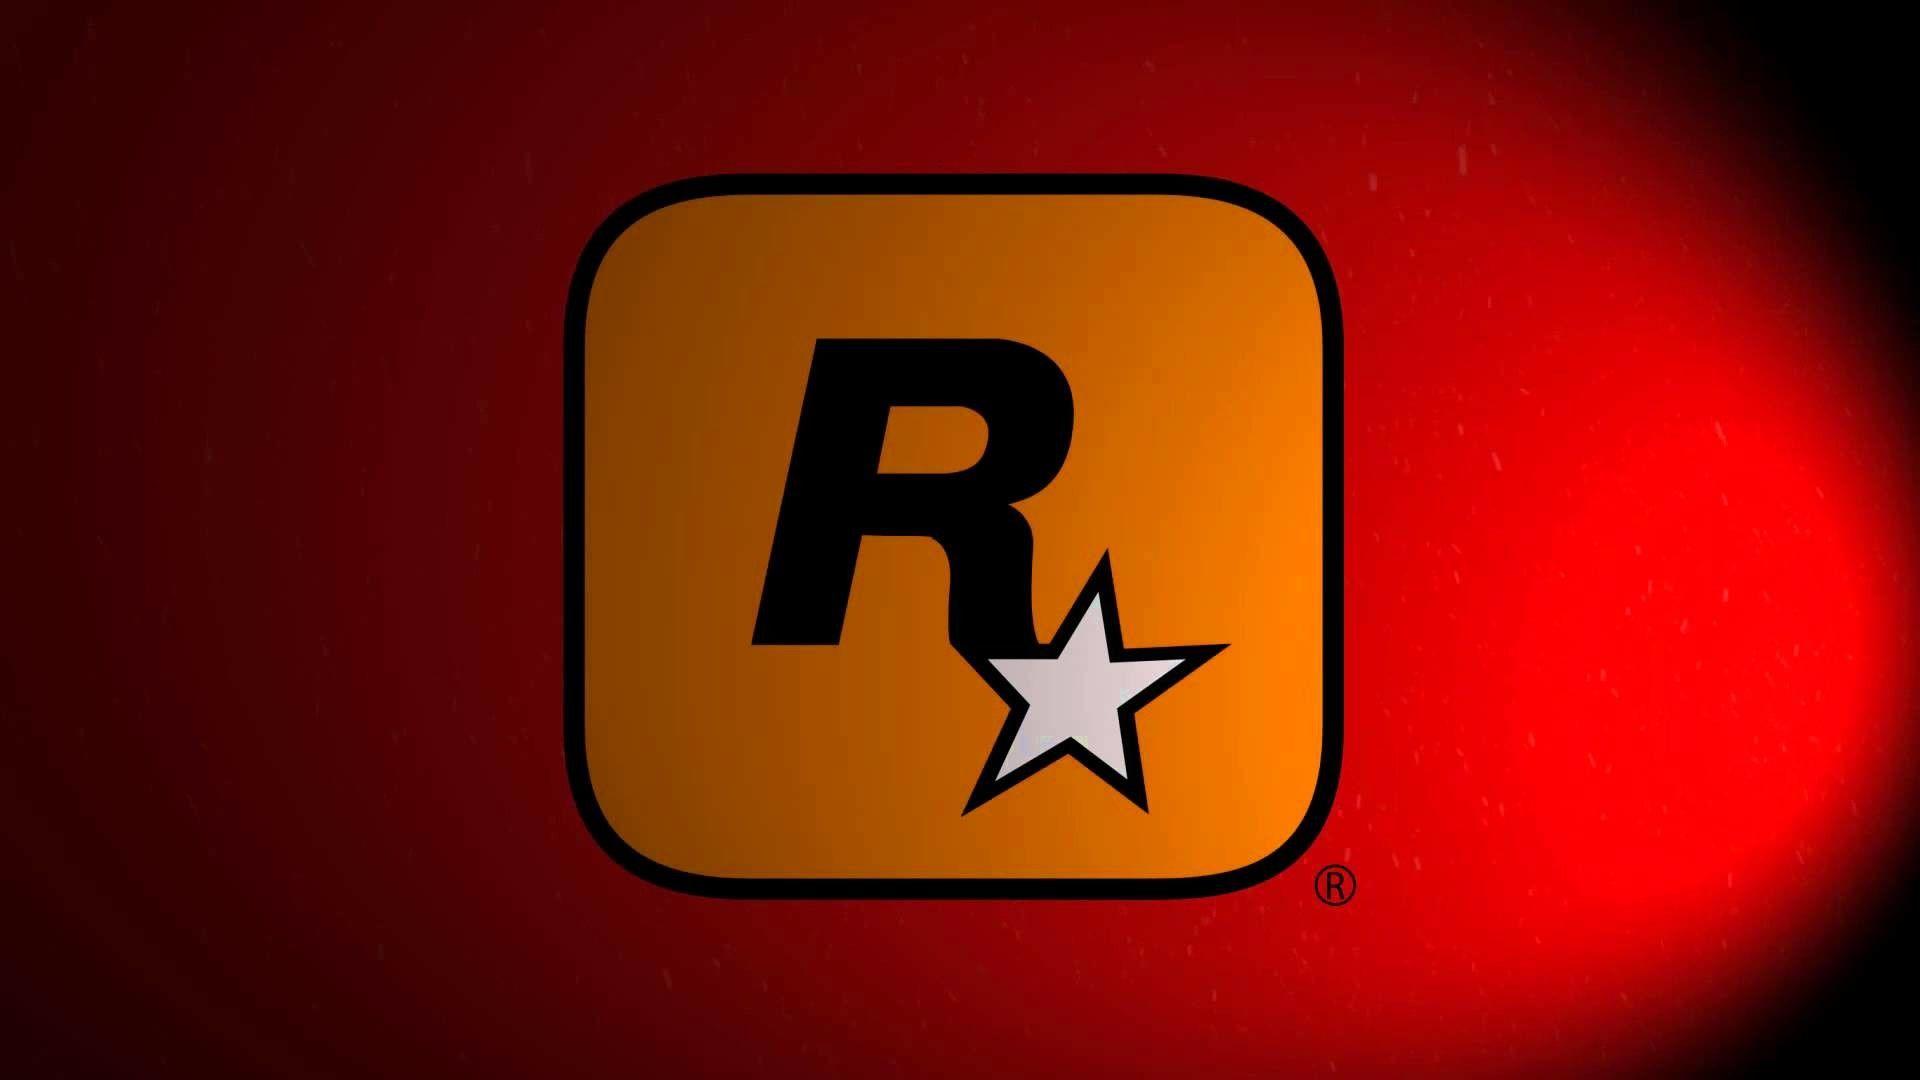 Rockstar Games Wallpapers - Top Free Rockstar Games Backgrounds ...